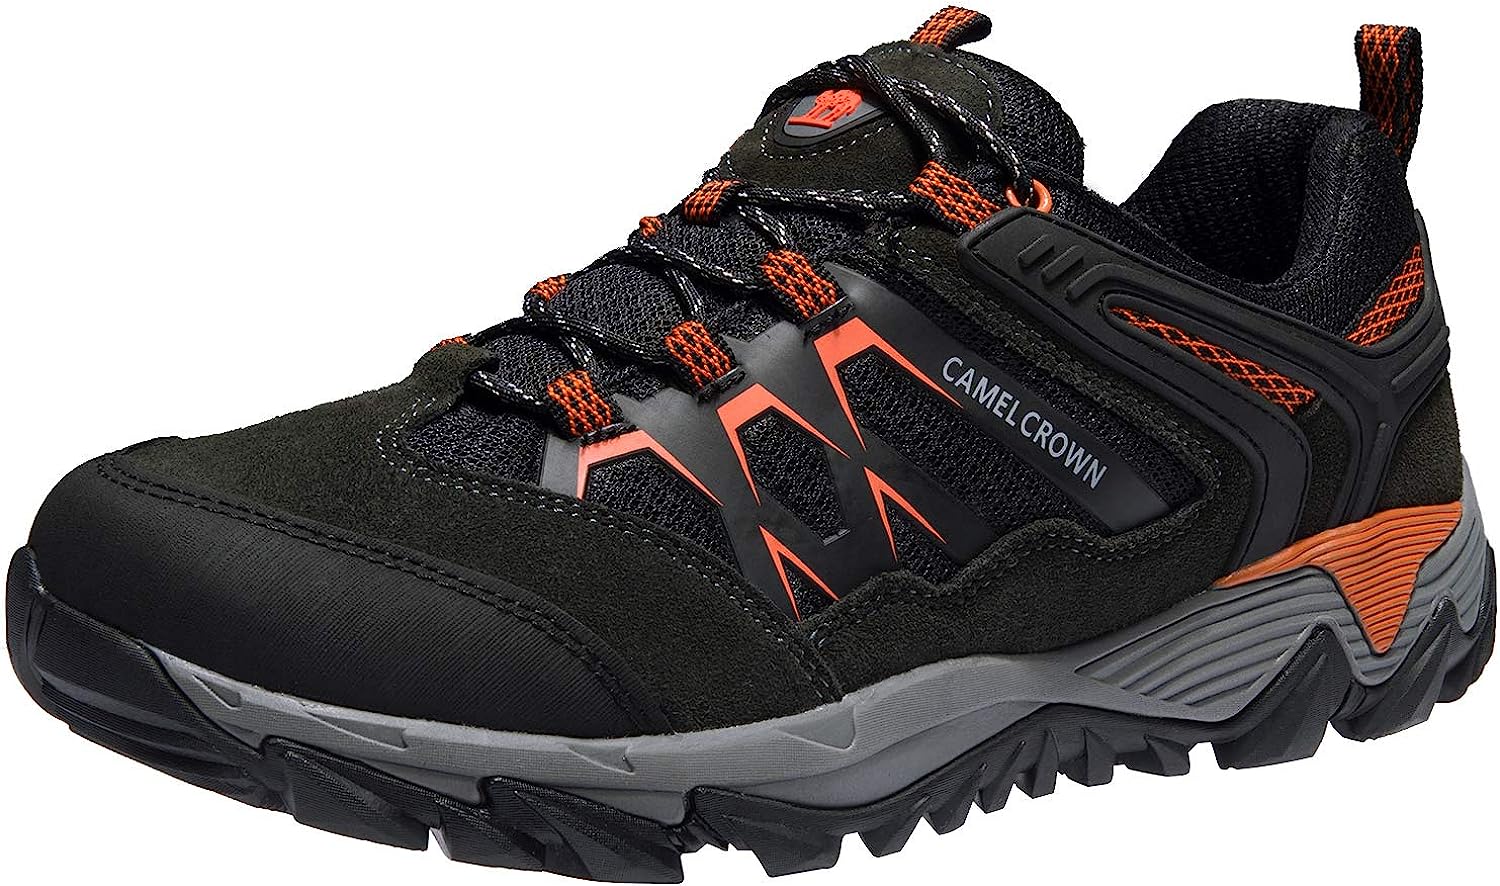 CAMEL CROWN Hiking Shoes Men Breathable Non-Slip [...]